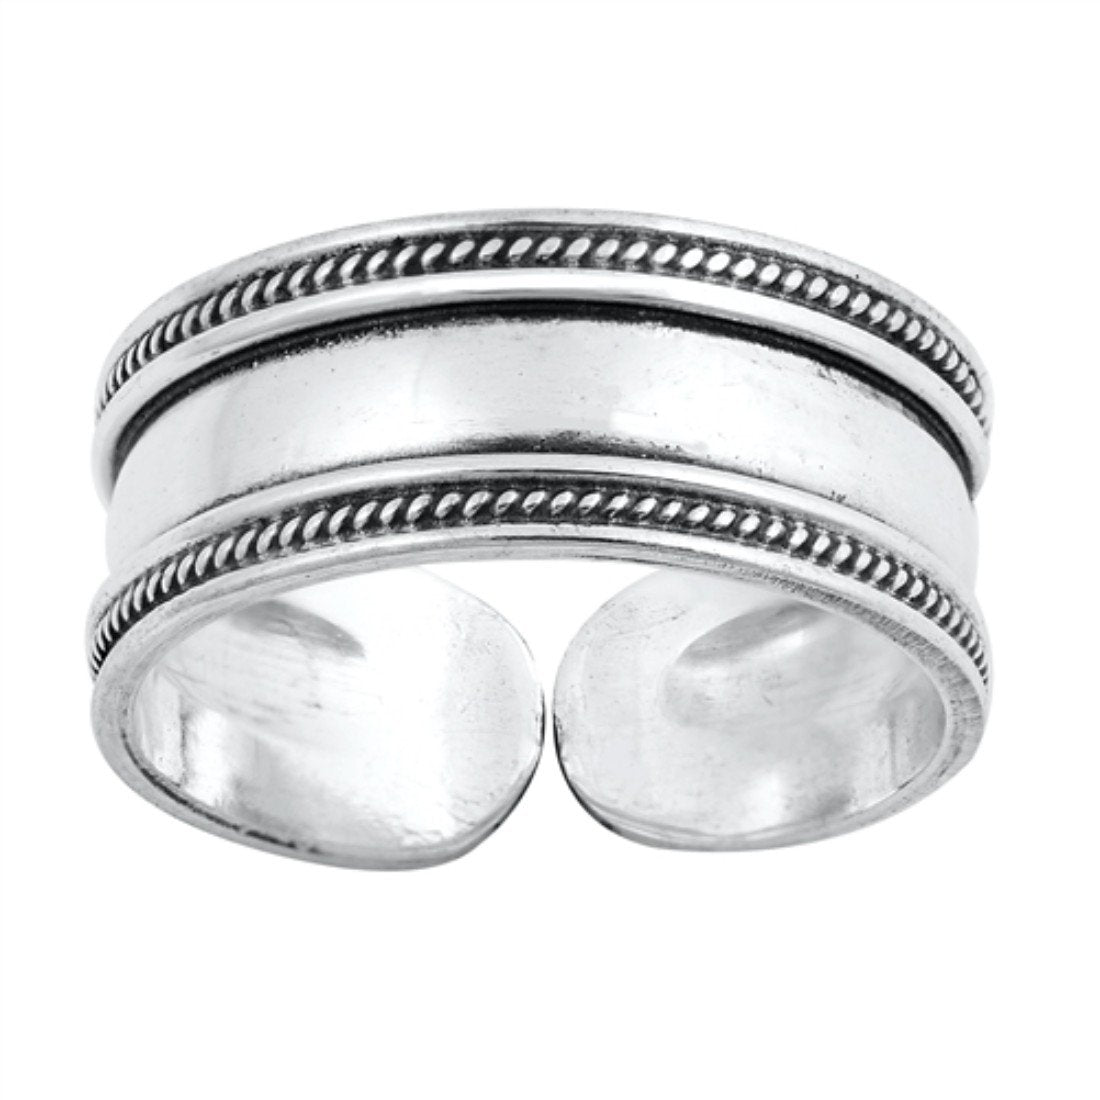 Bali Design Toe Ring Adjustable Band 925 Sterling Silver For Women (6mm)